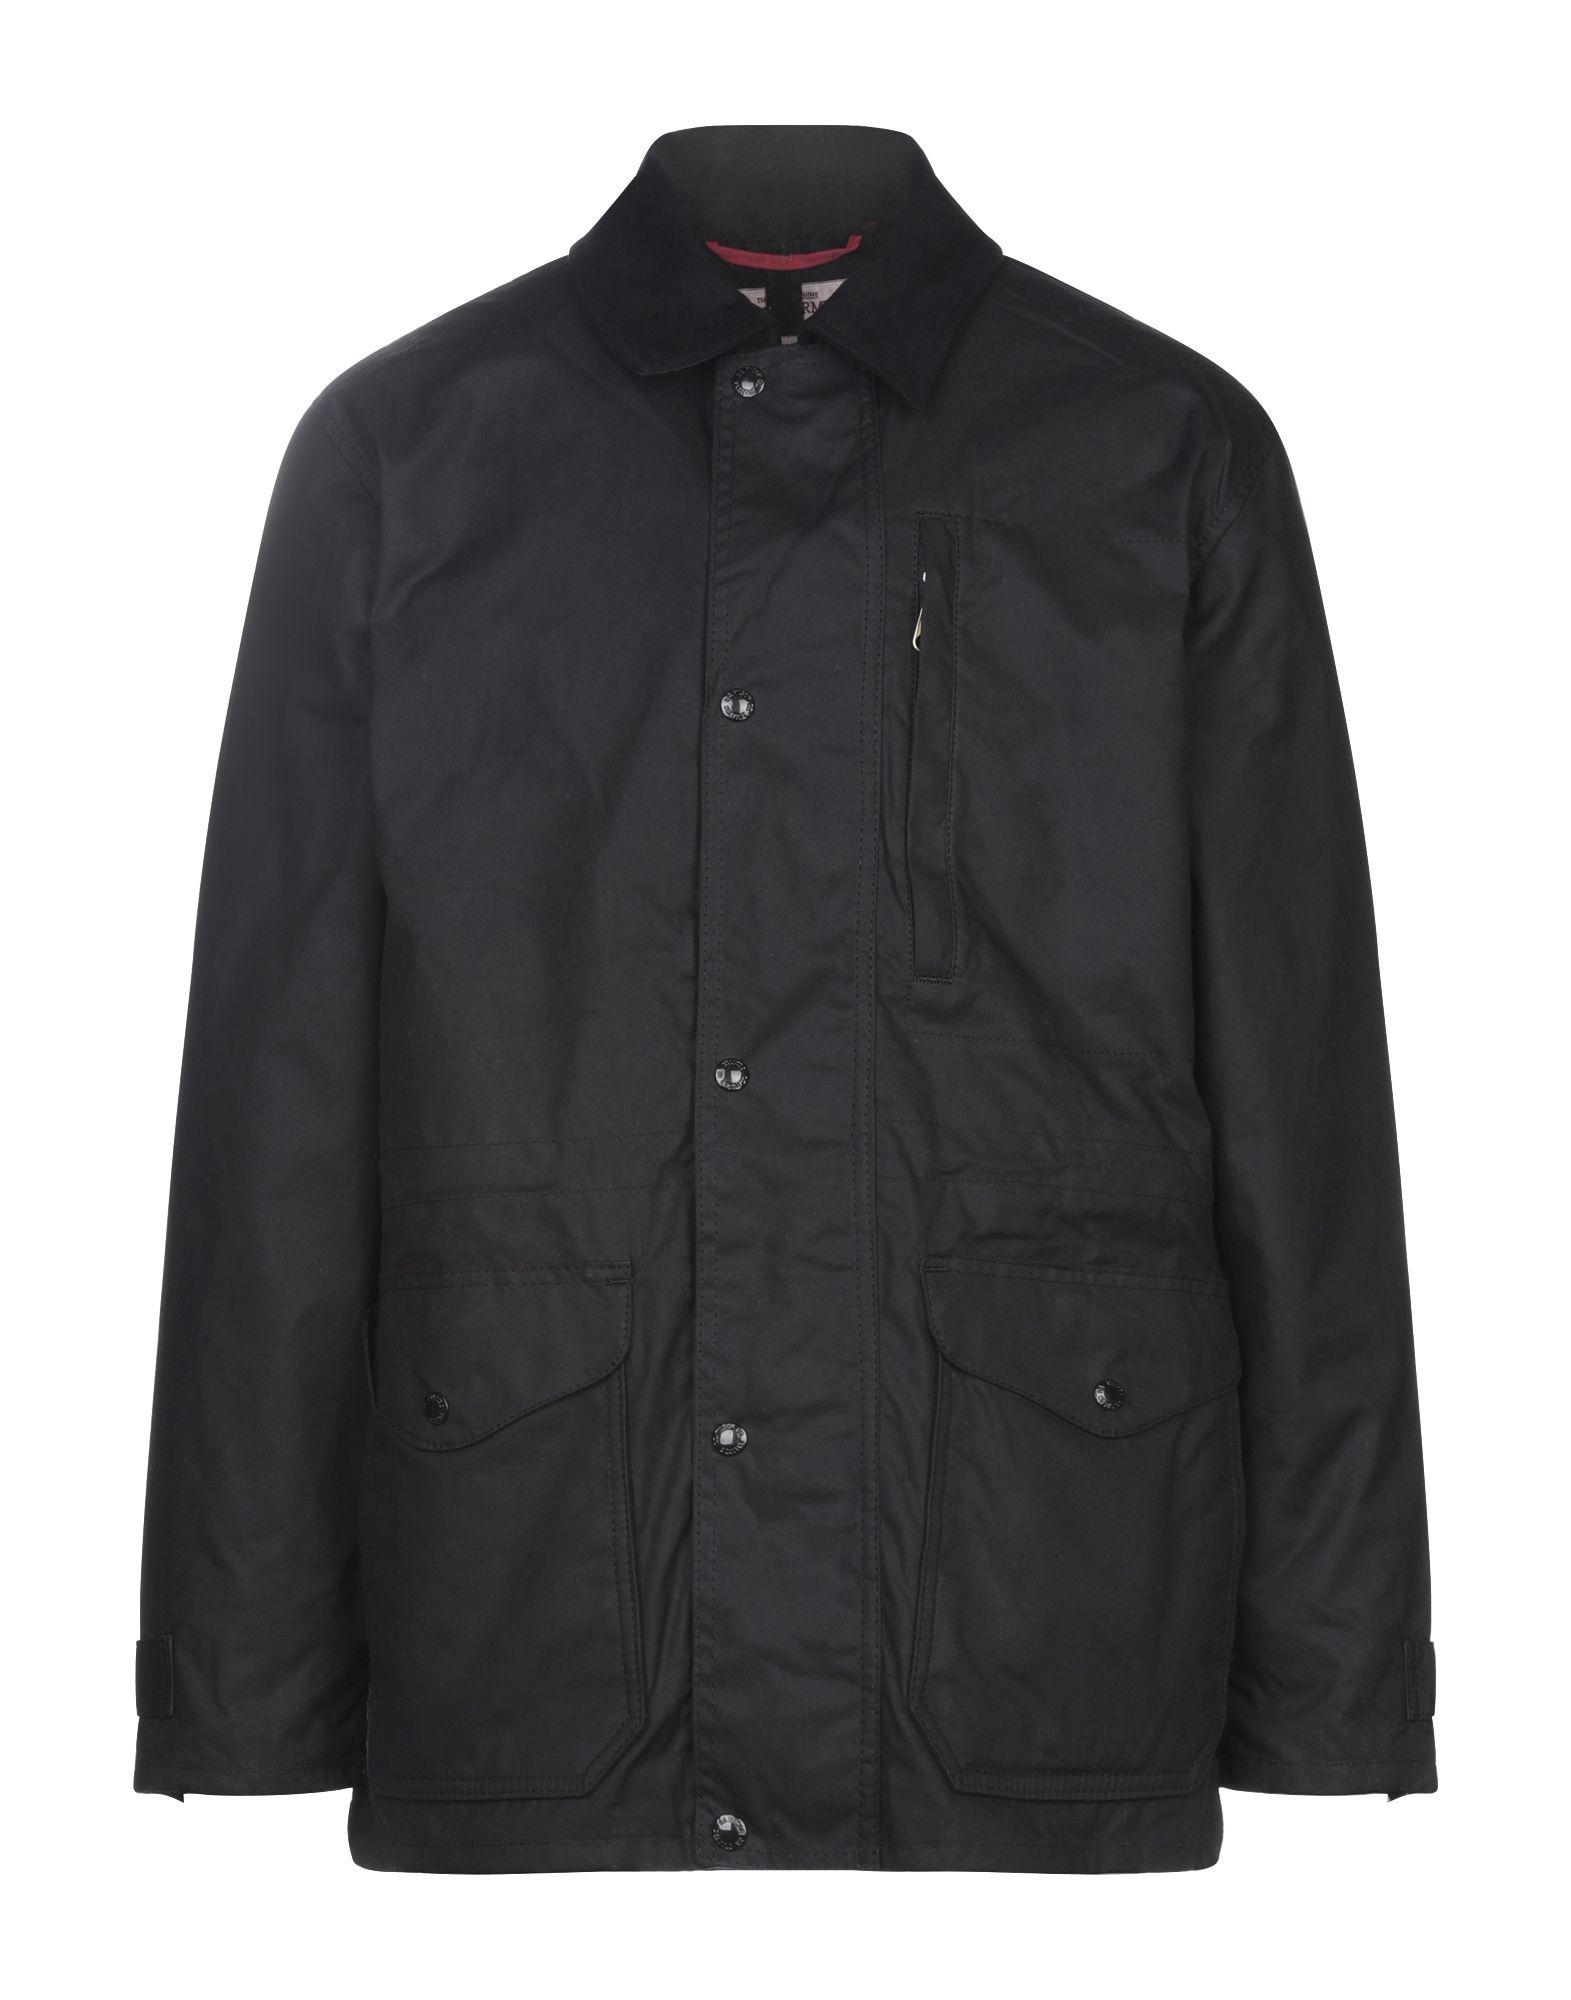 Filson Flannel Coat in Black for Men - Lyst